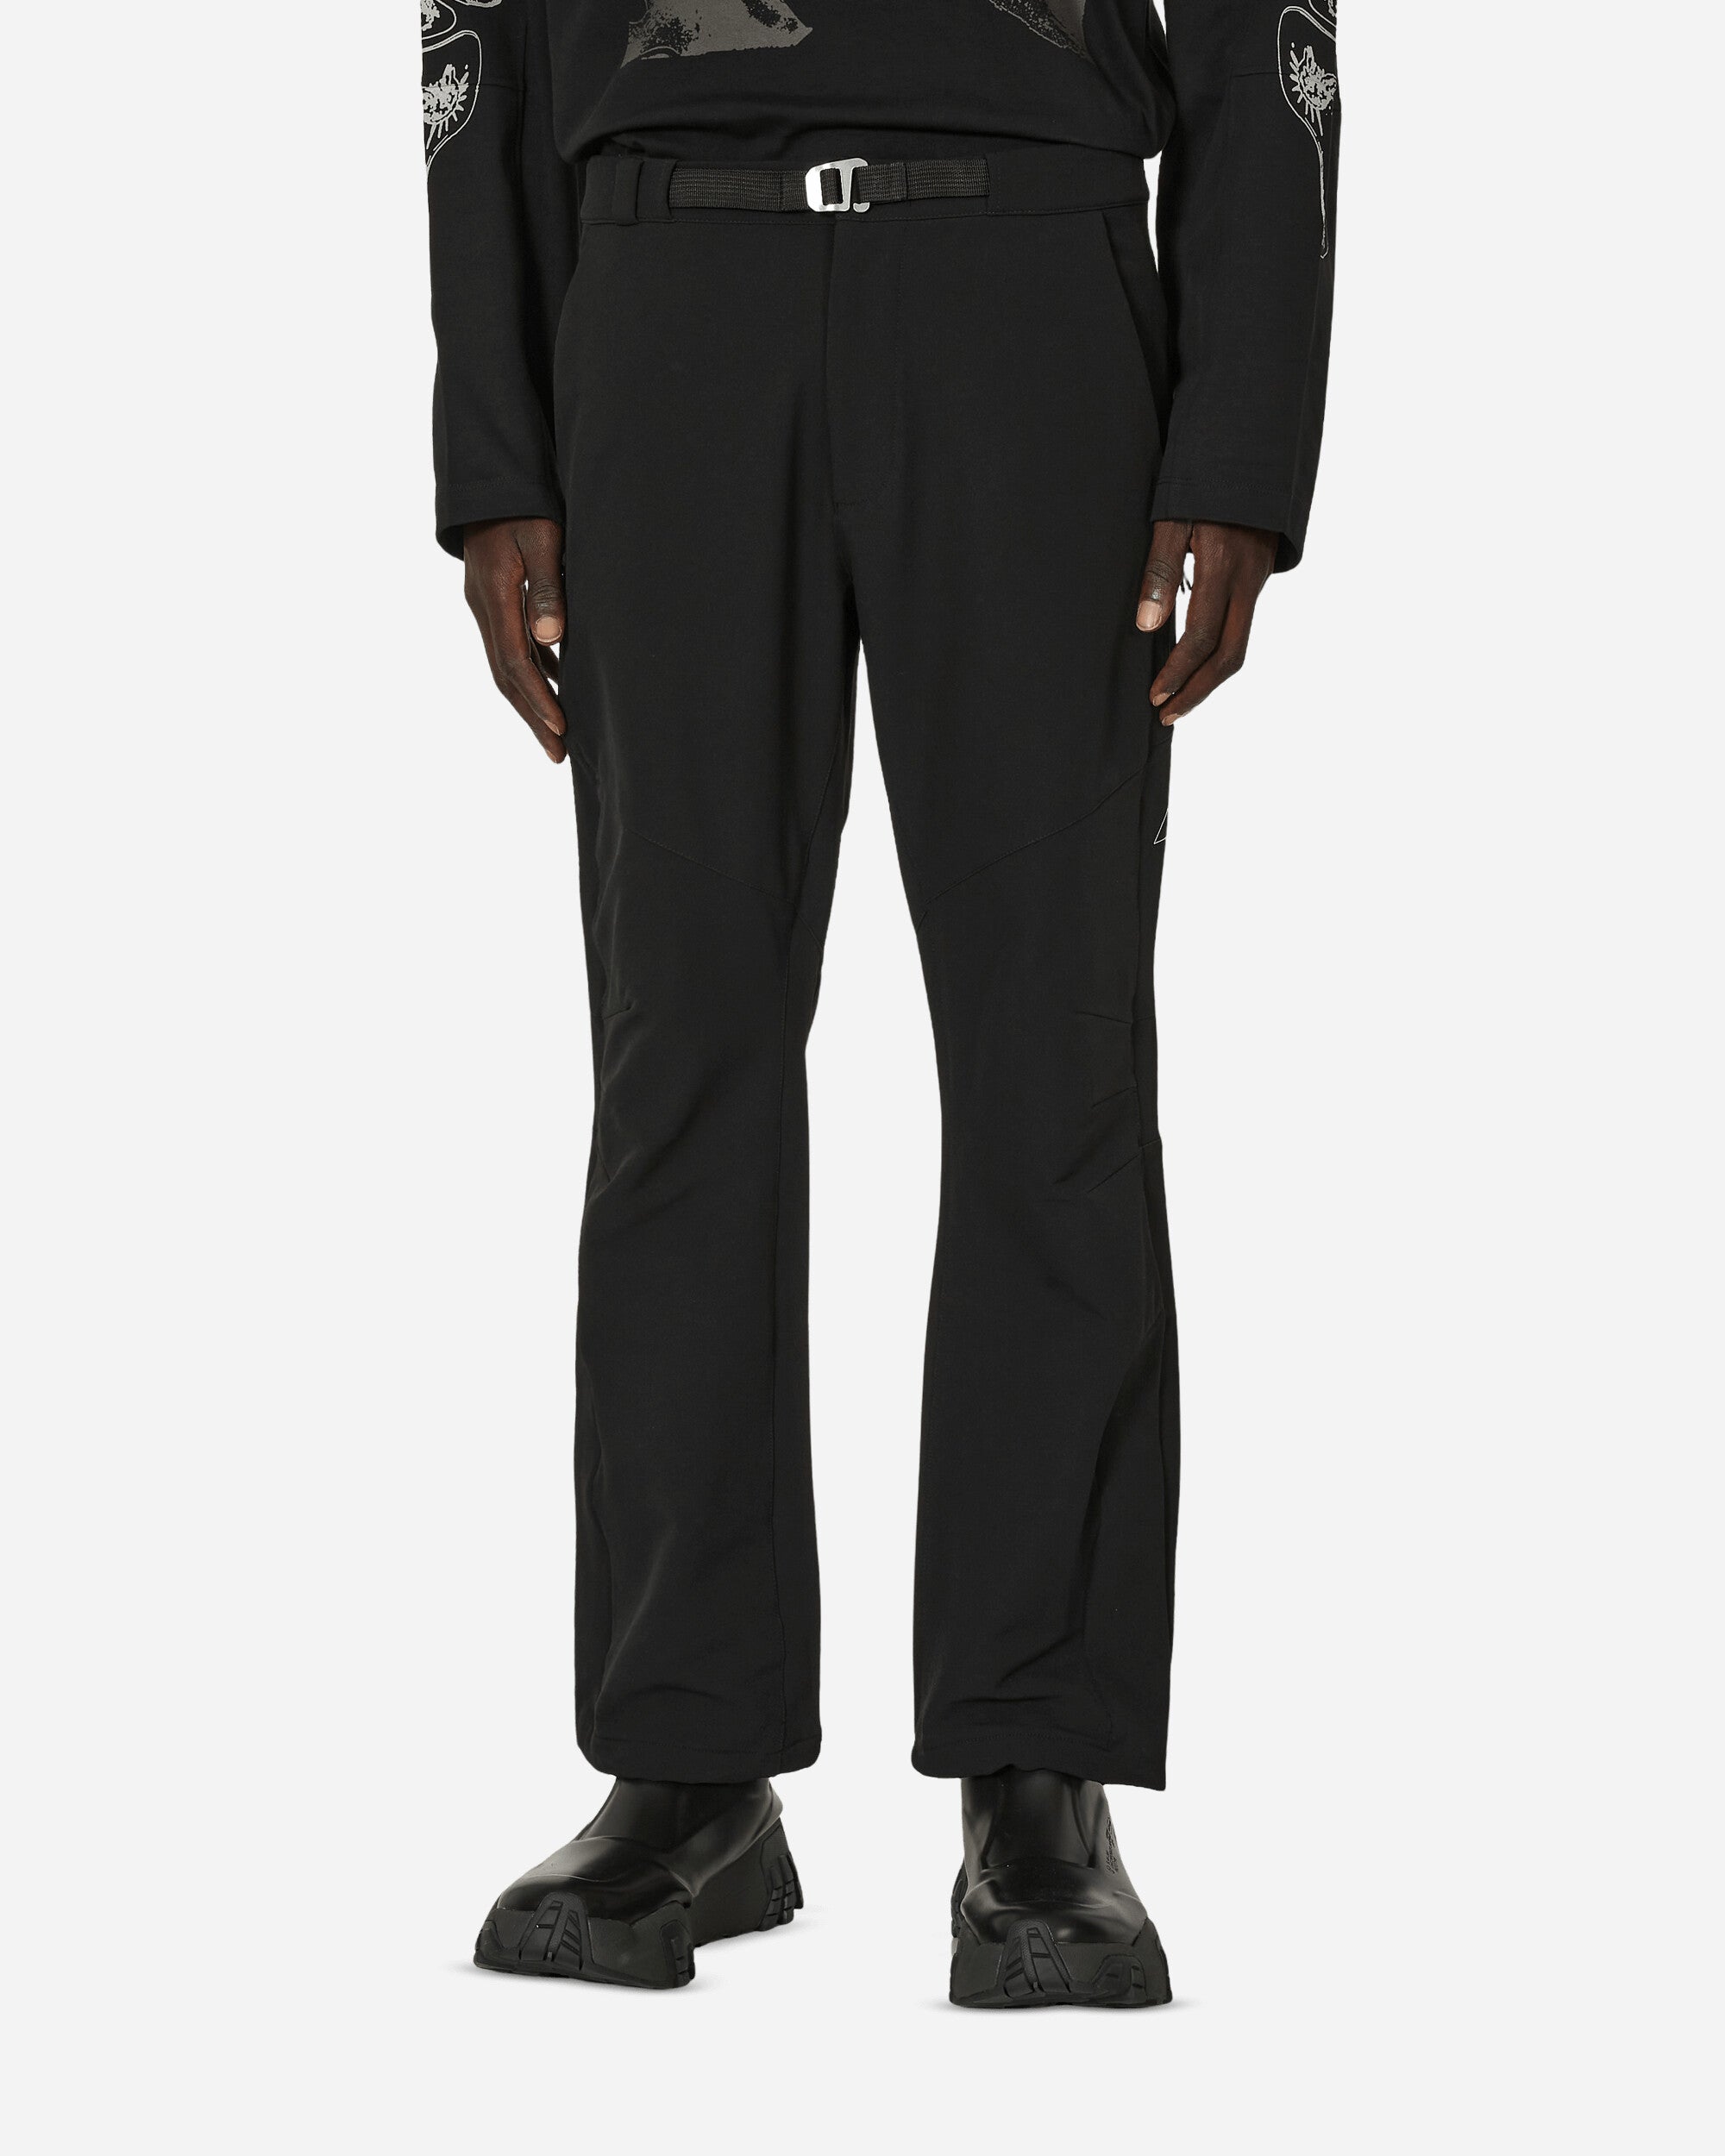 ROA Softshell Technical Trousers Black - Slam Jam® Official Store